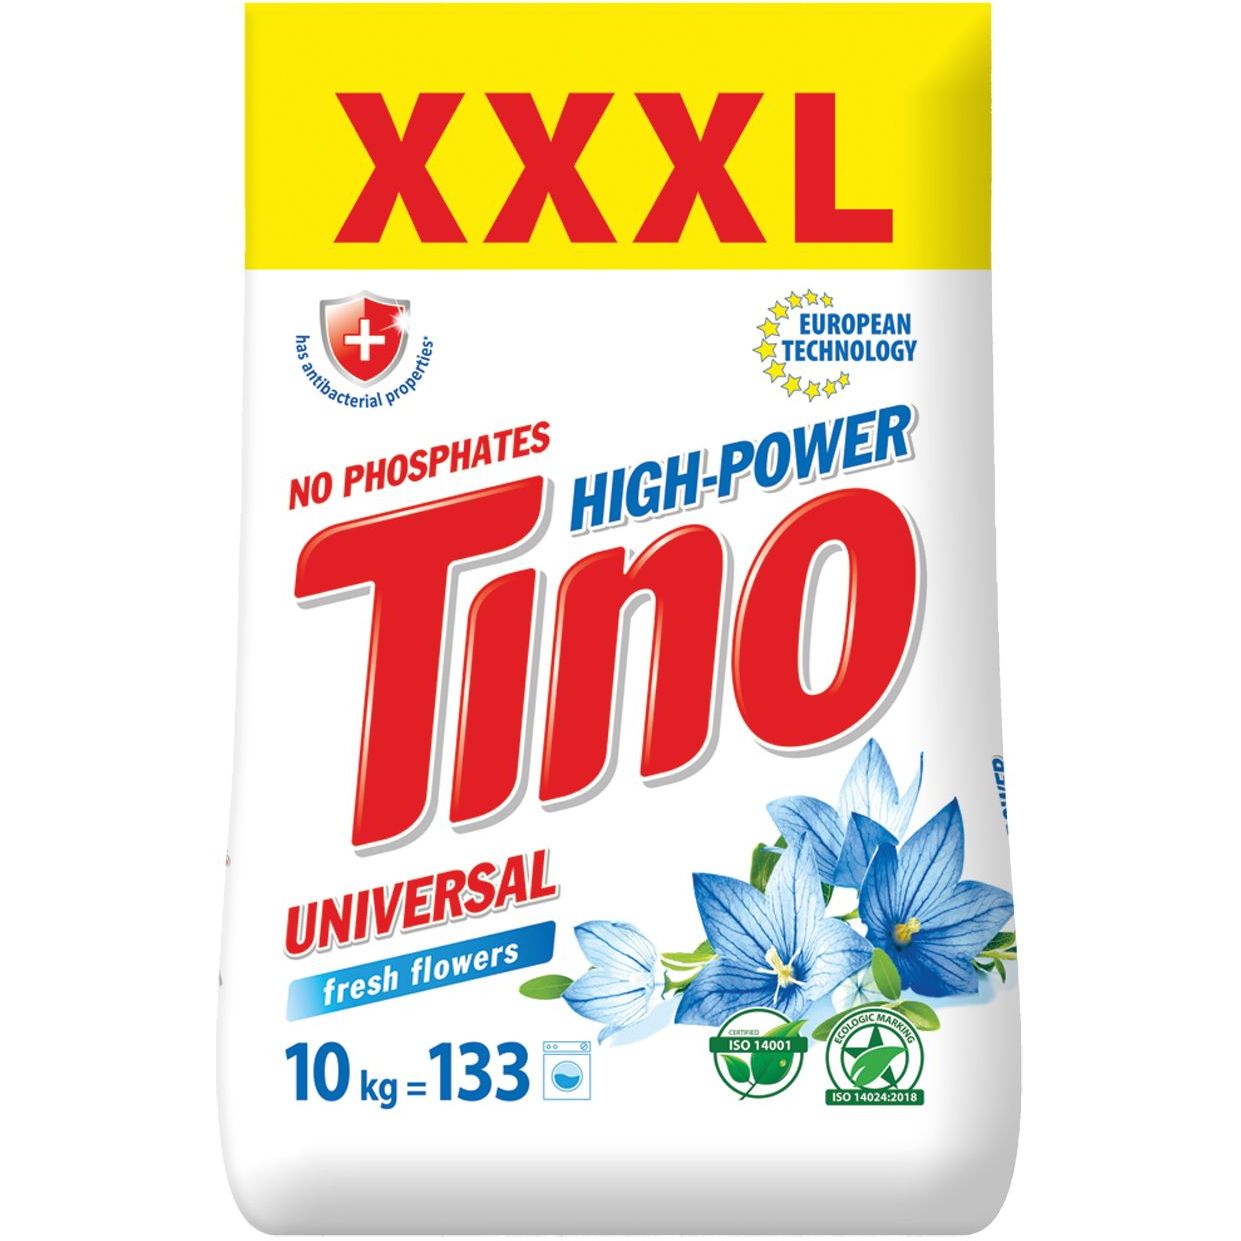 Порошок пральний Tino High-Power Universal Fresh flowers, 10 кг - фото 1